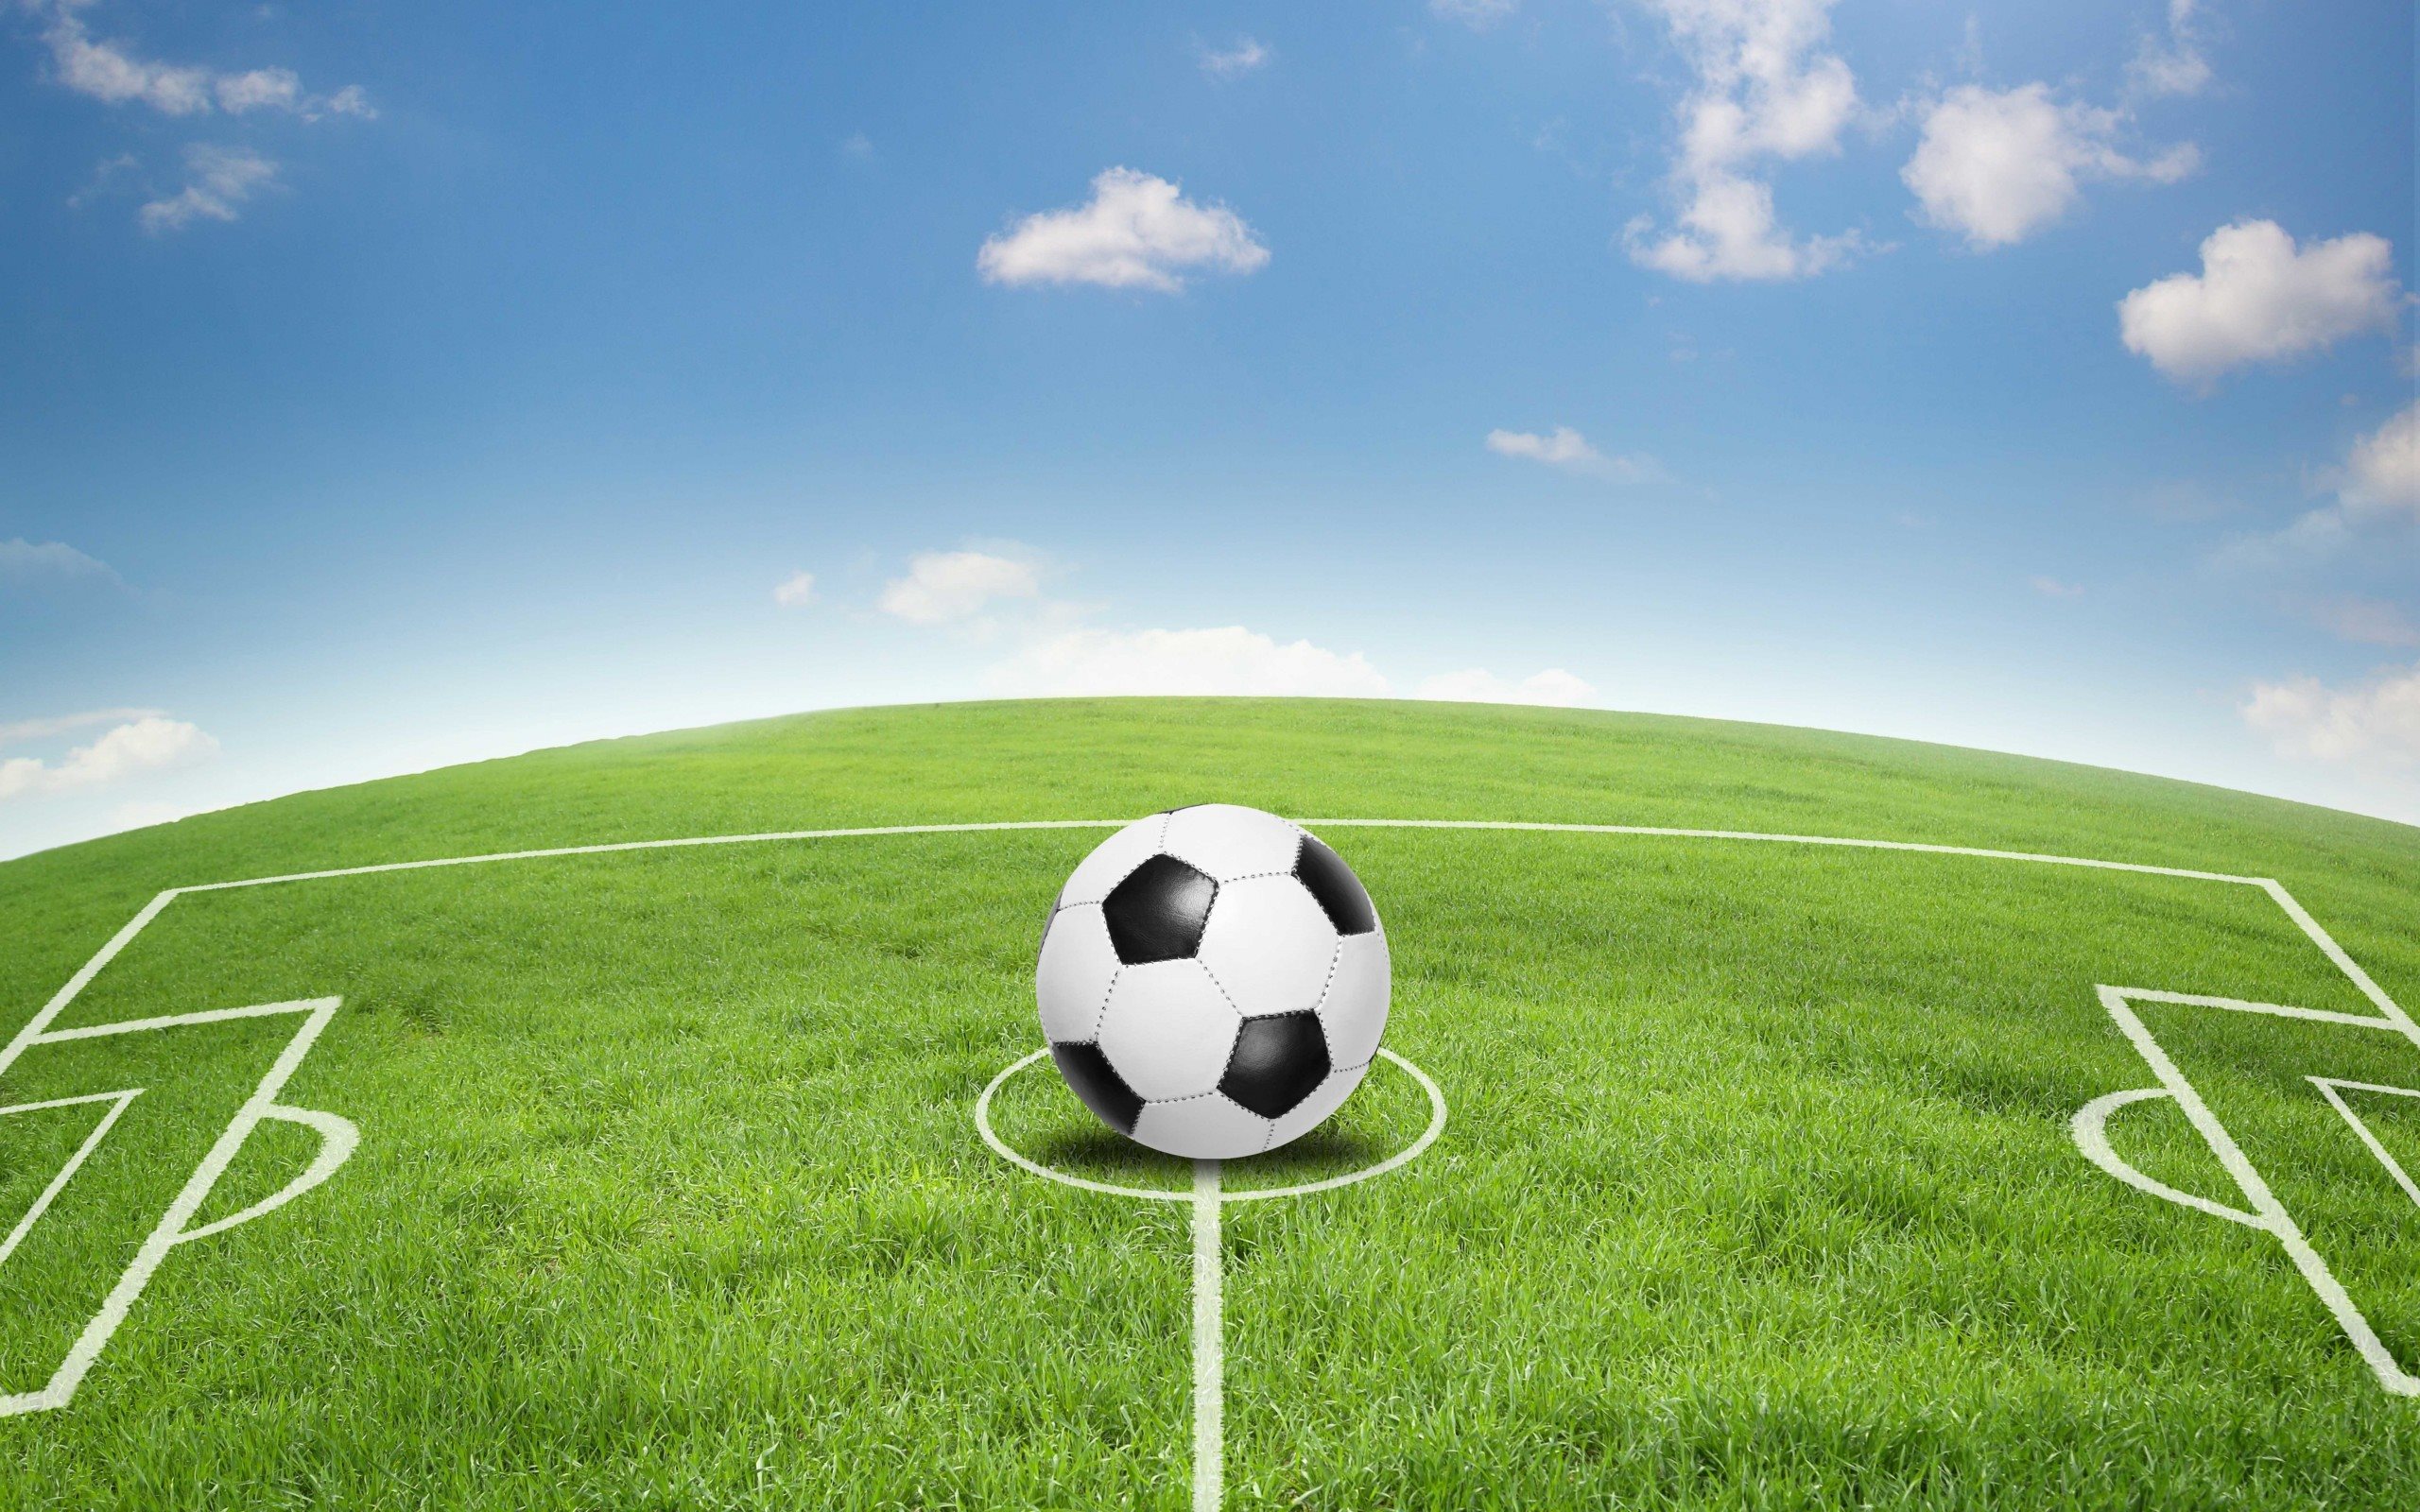 Download wallpapers soccer stadium, football field, soccer ball, soccer